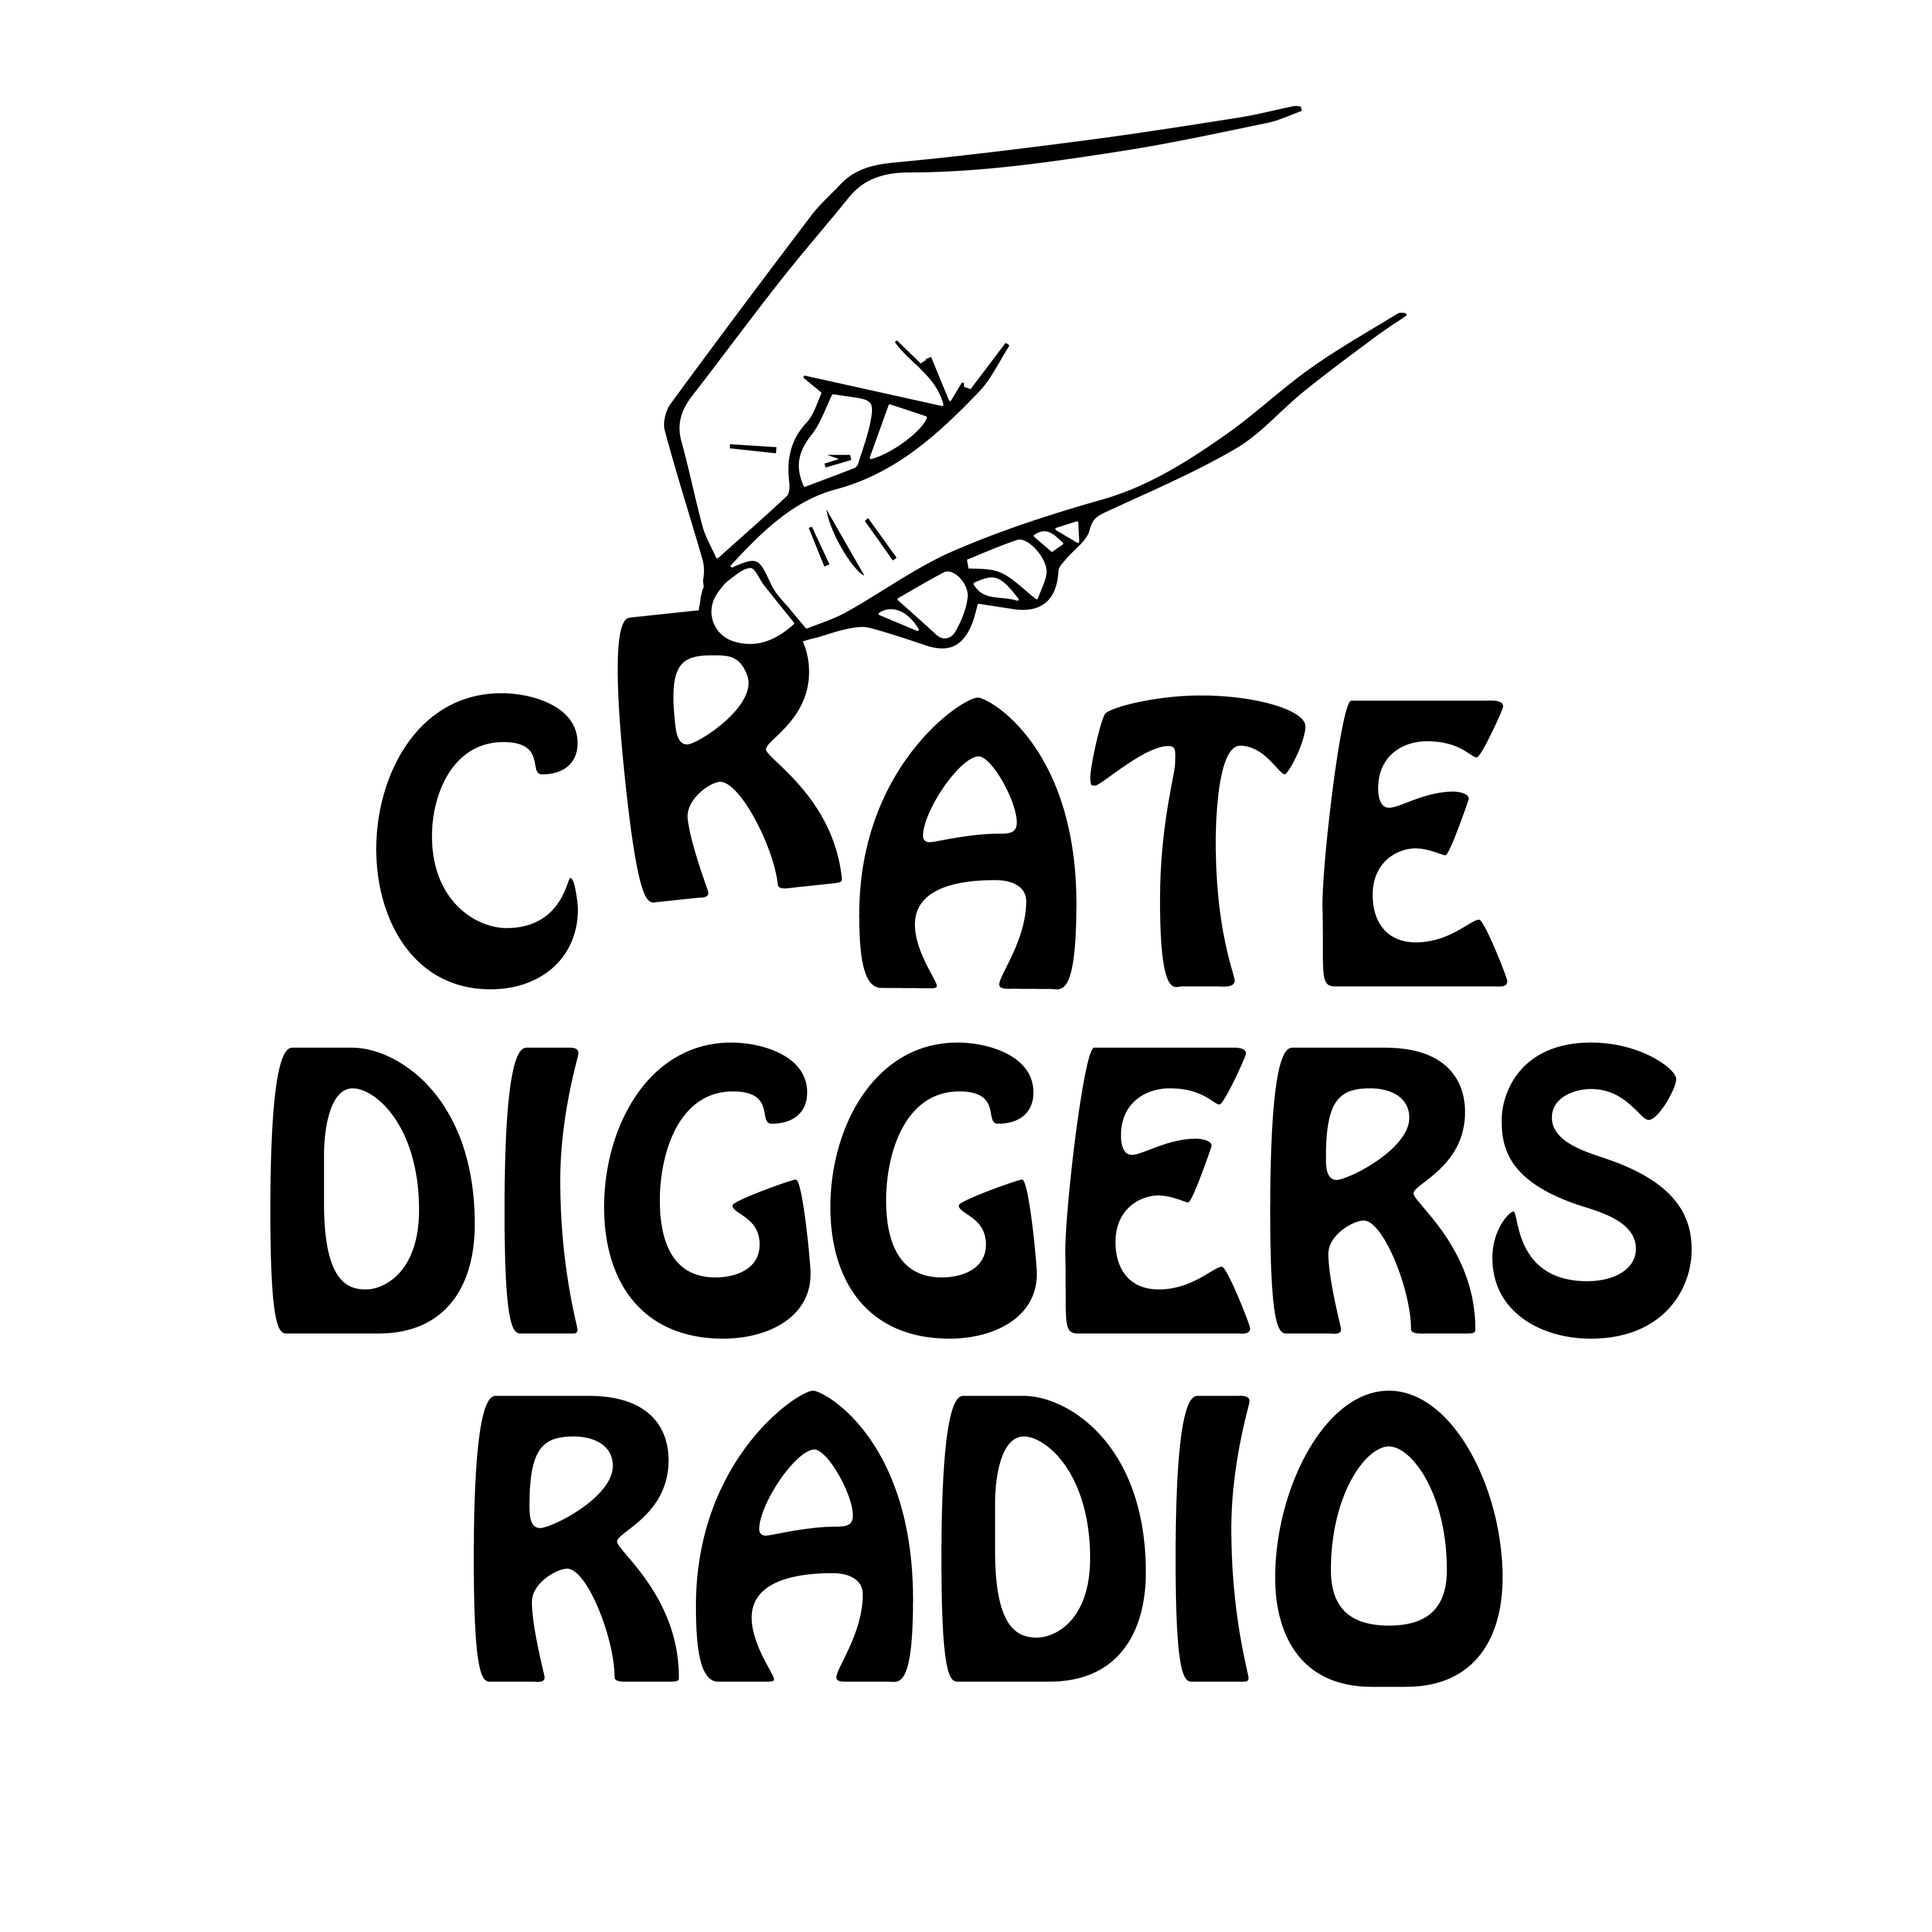 Crate diggers radio